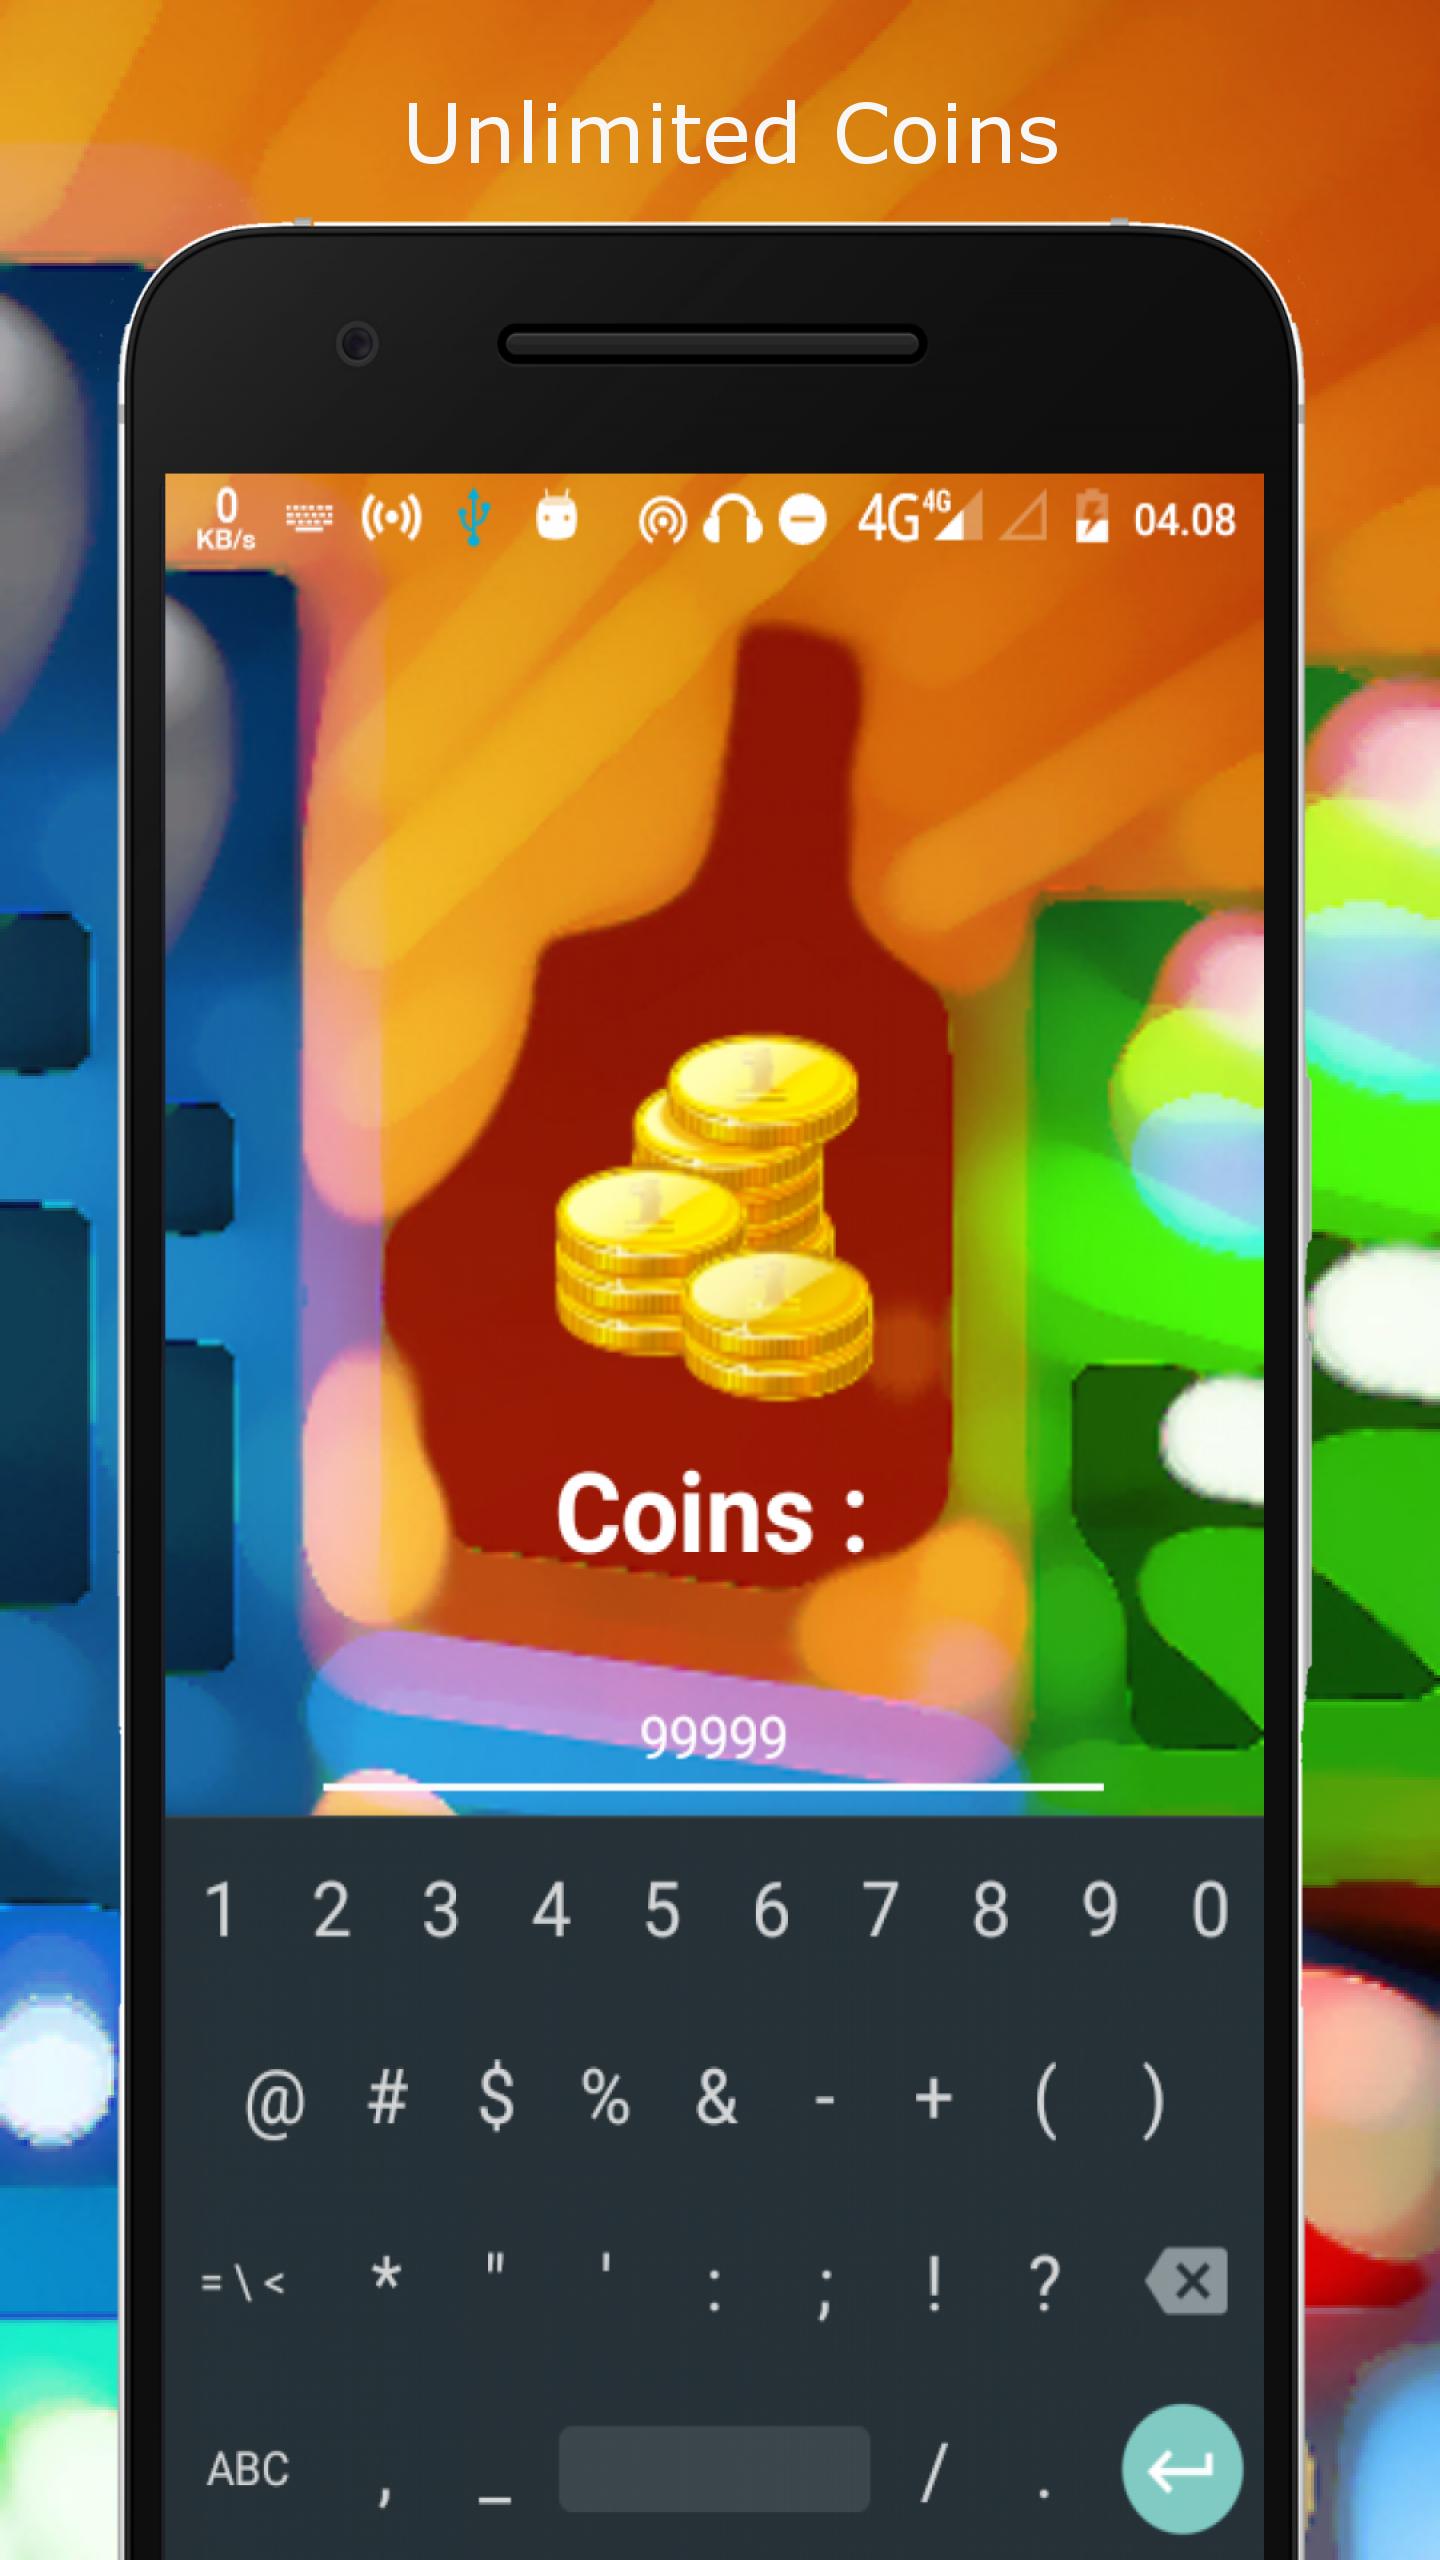 Generate Coins for 8 ball pool APK do pobrania na Androida